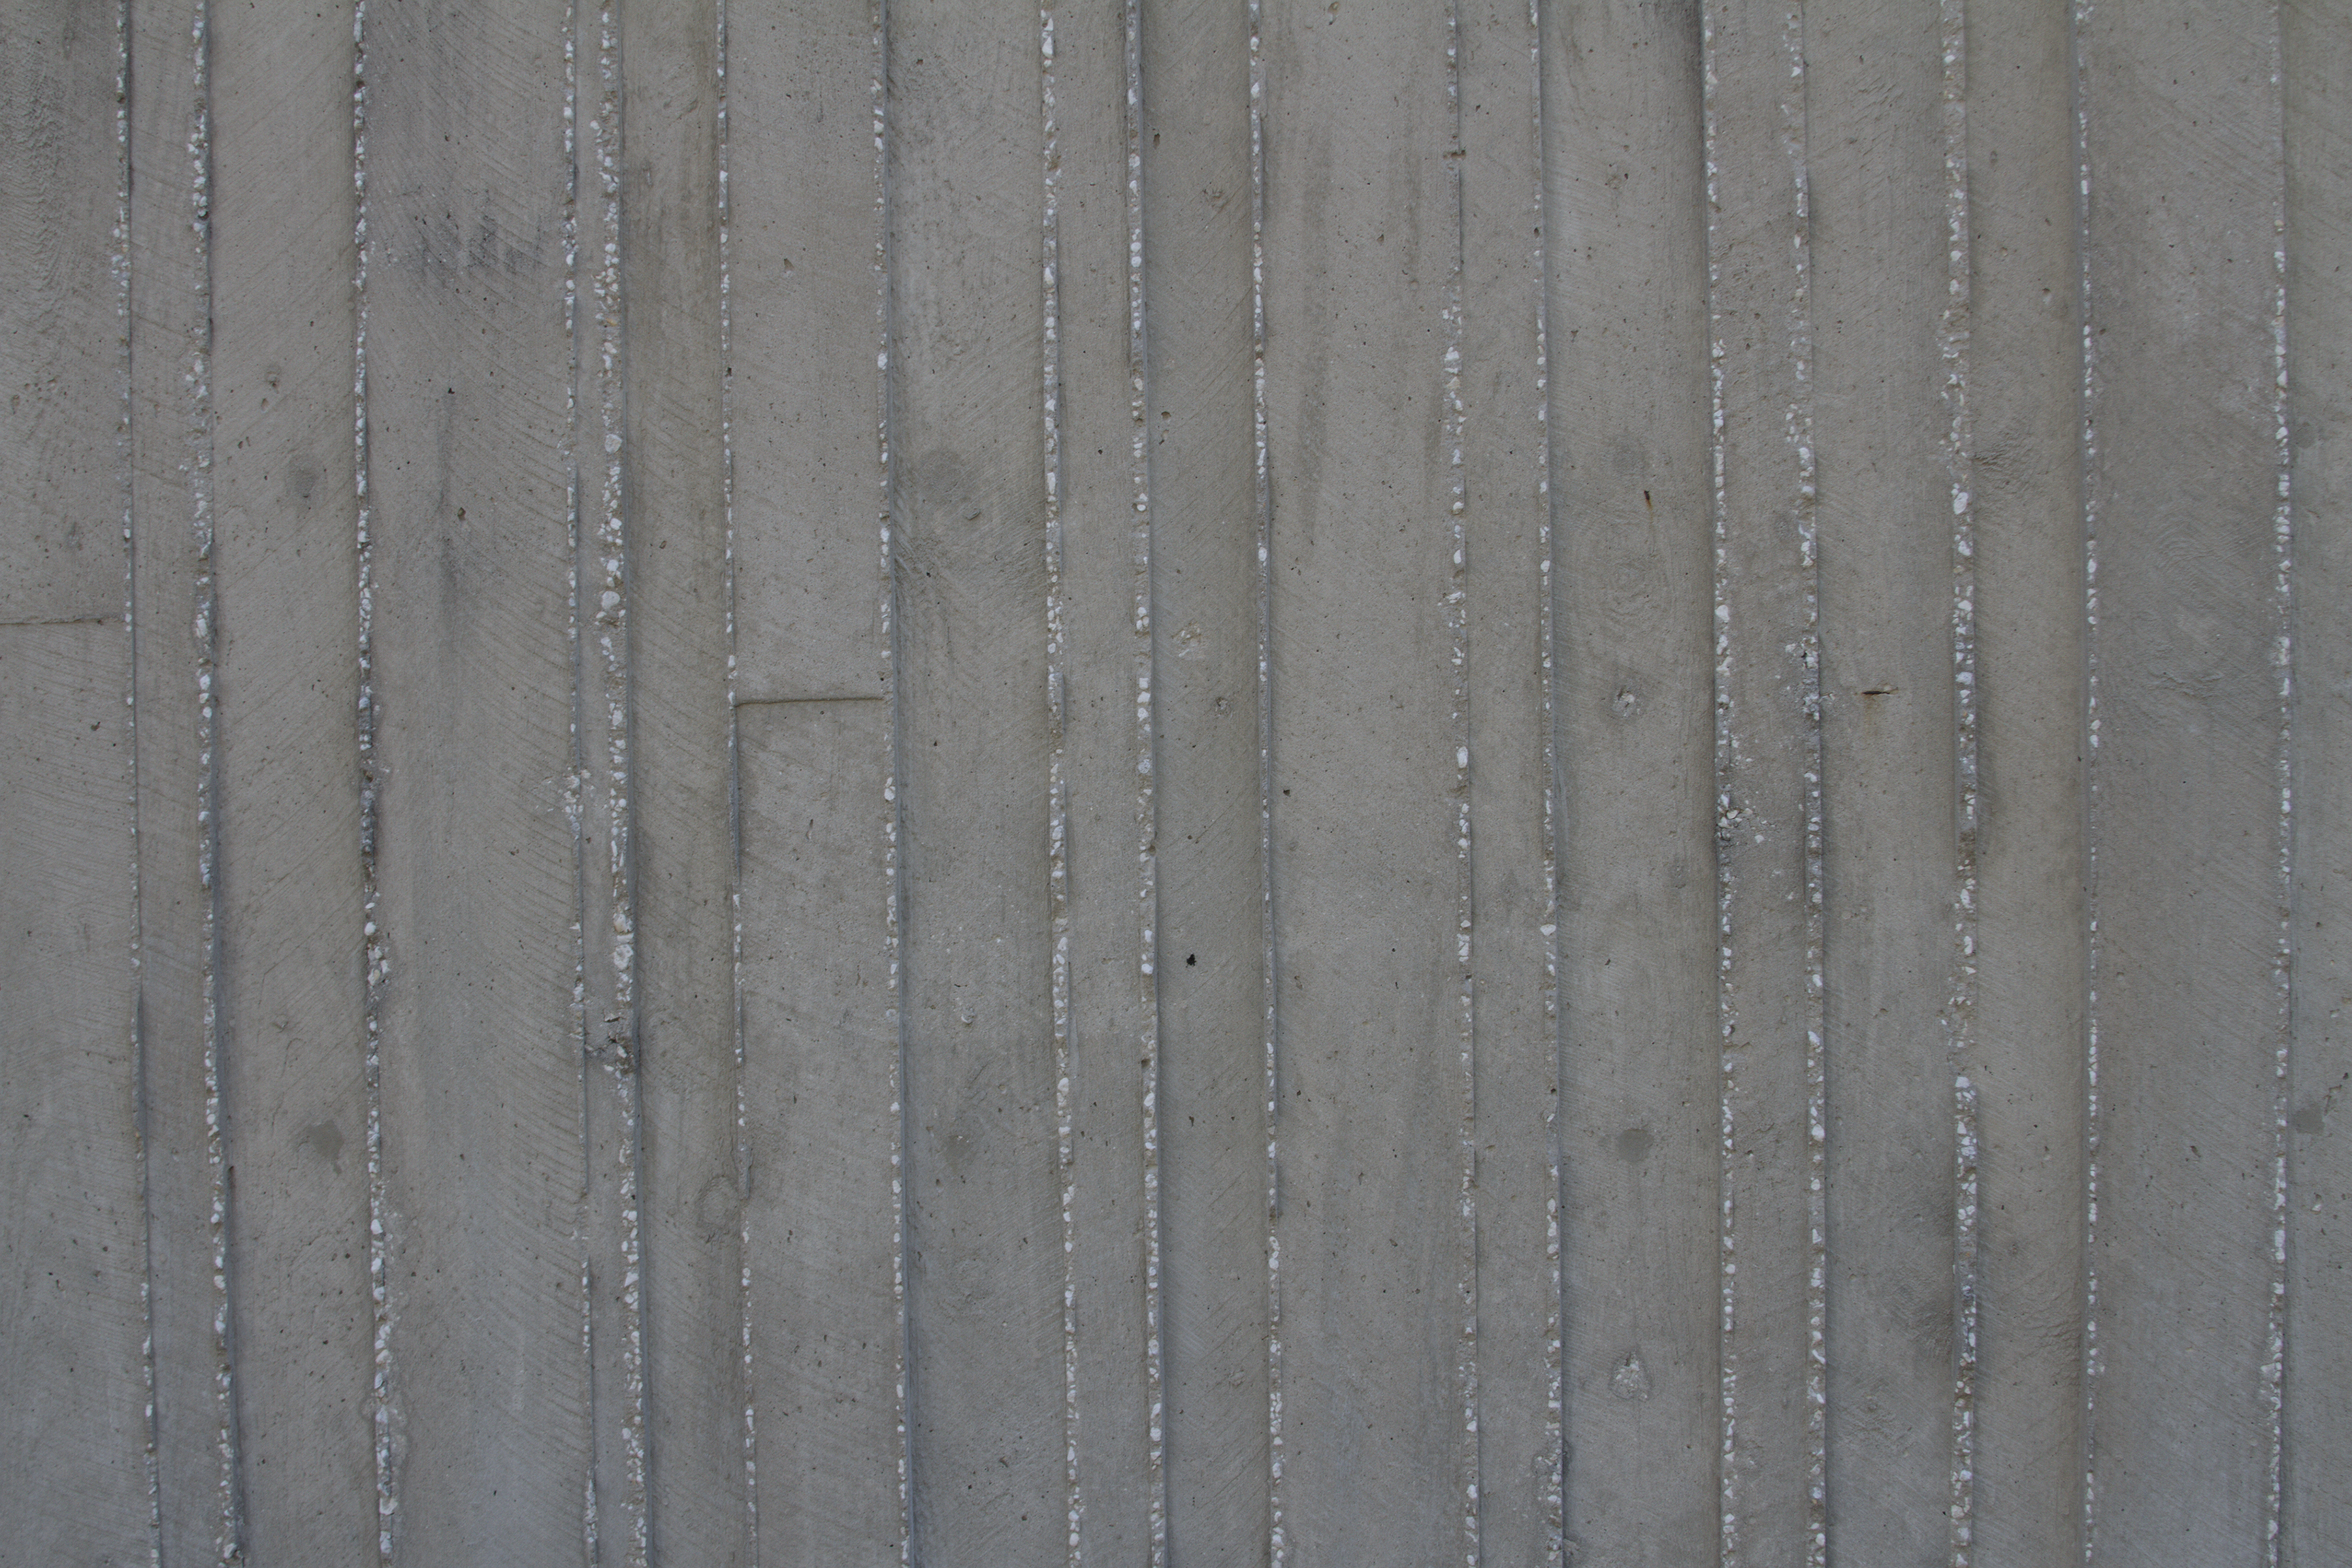 Concrete texture photo